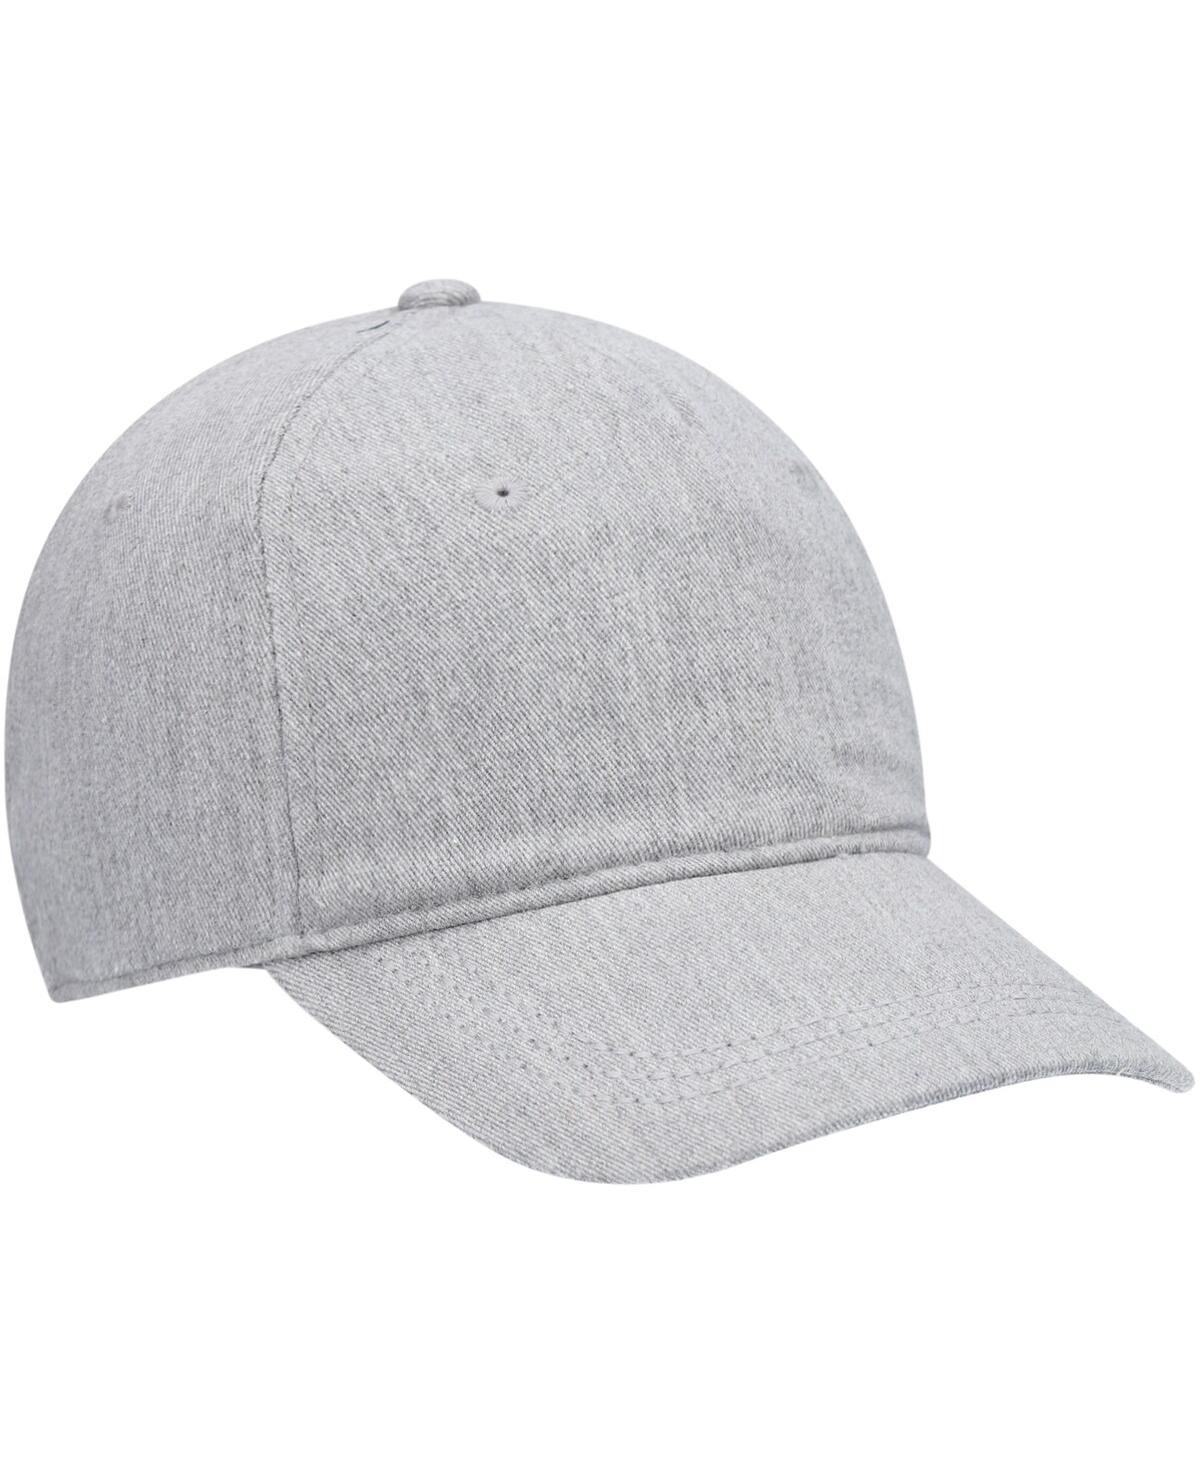 Shop Roxy Women's  Heathered Gray Extra Innings Adjustable Hat